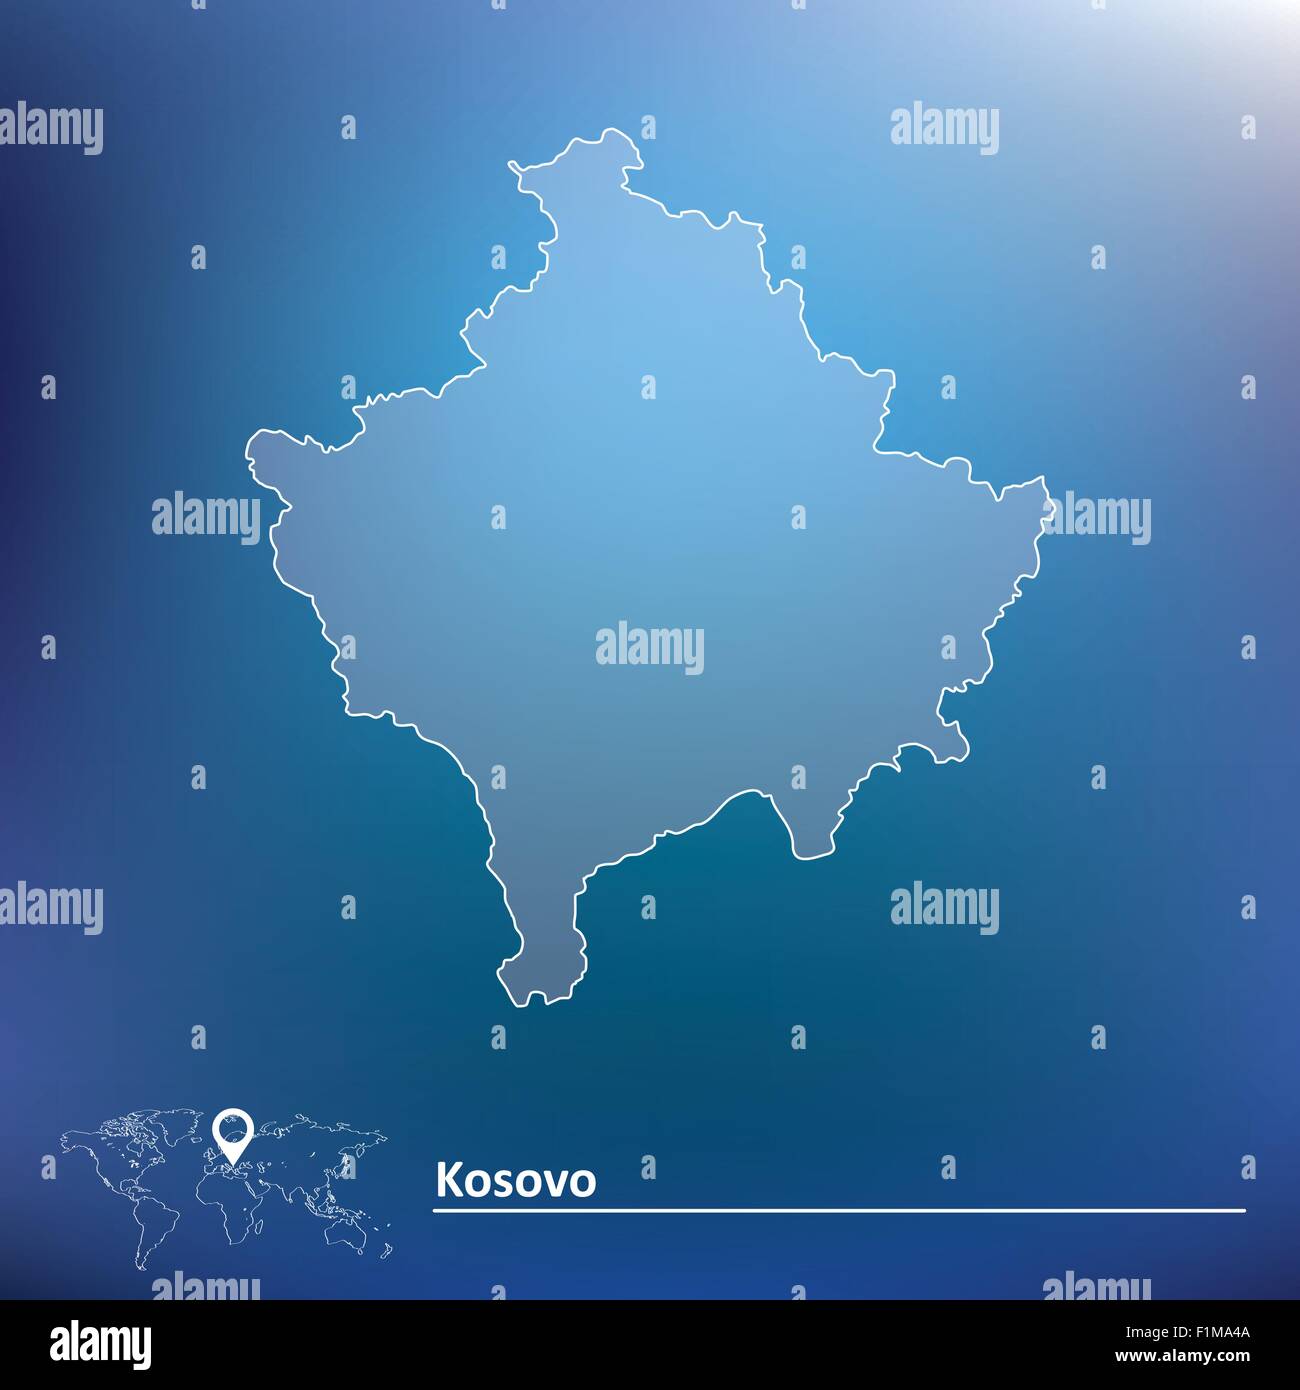 Map of Kosovo - vector illustration Stock Vector